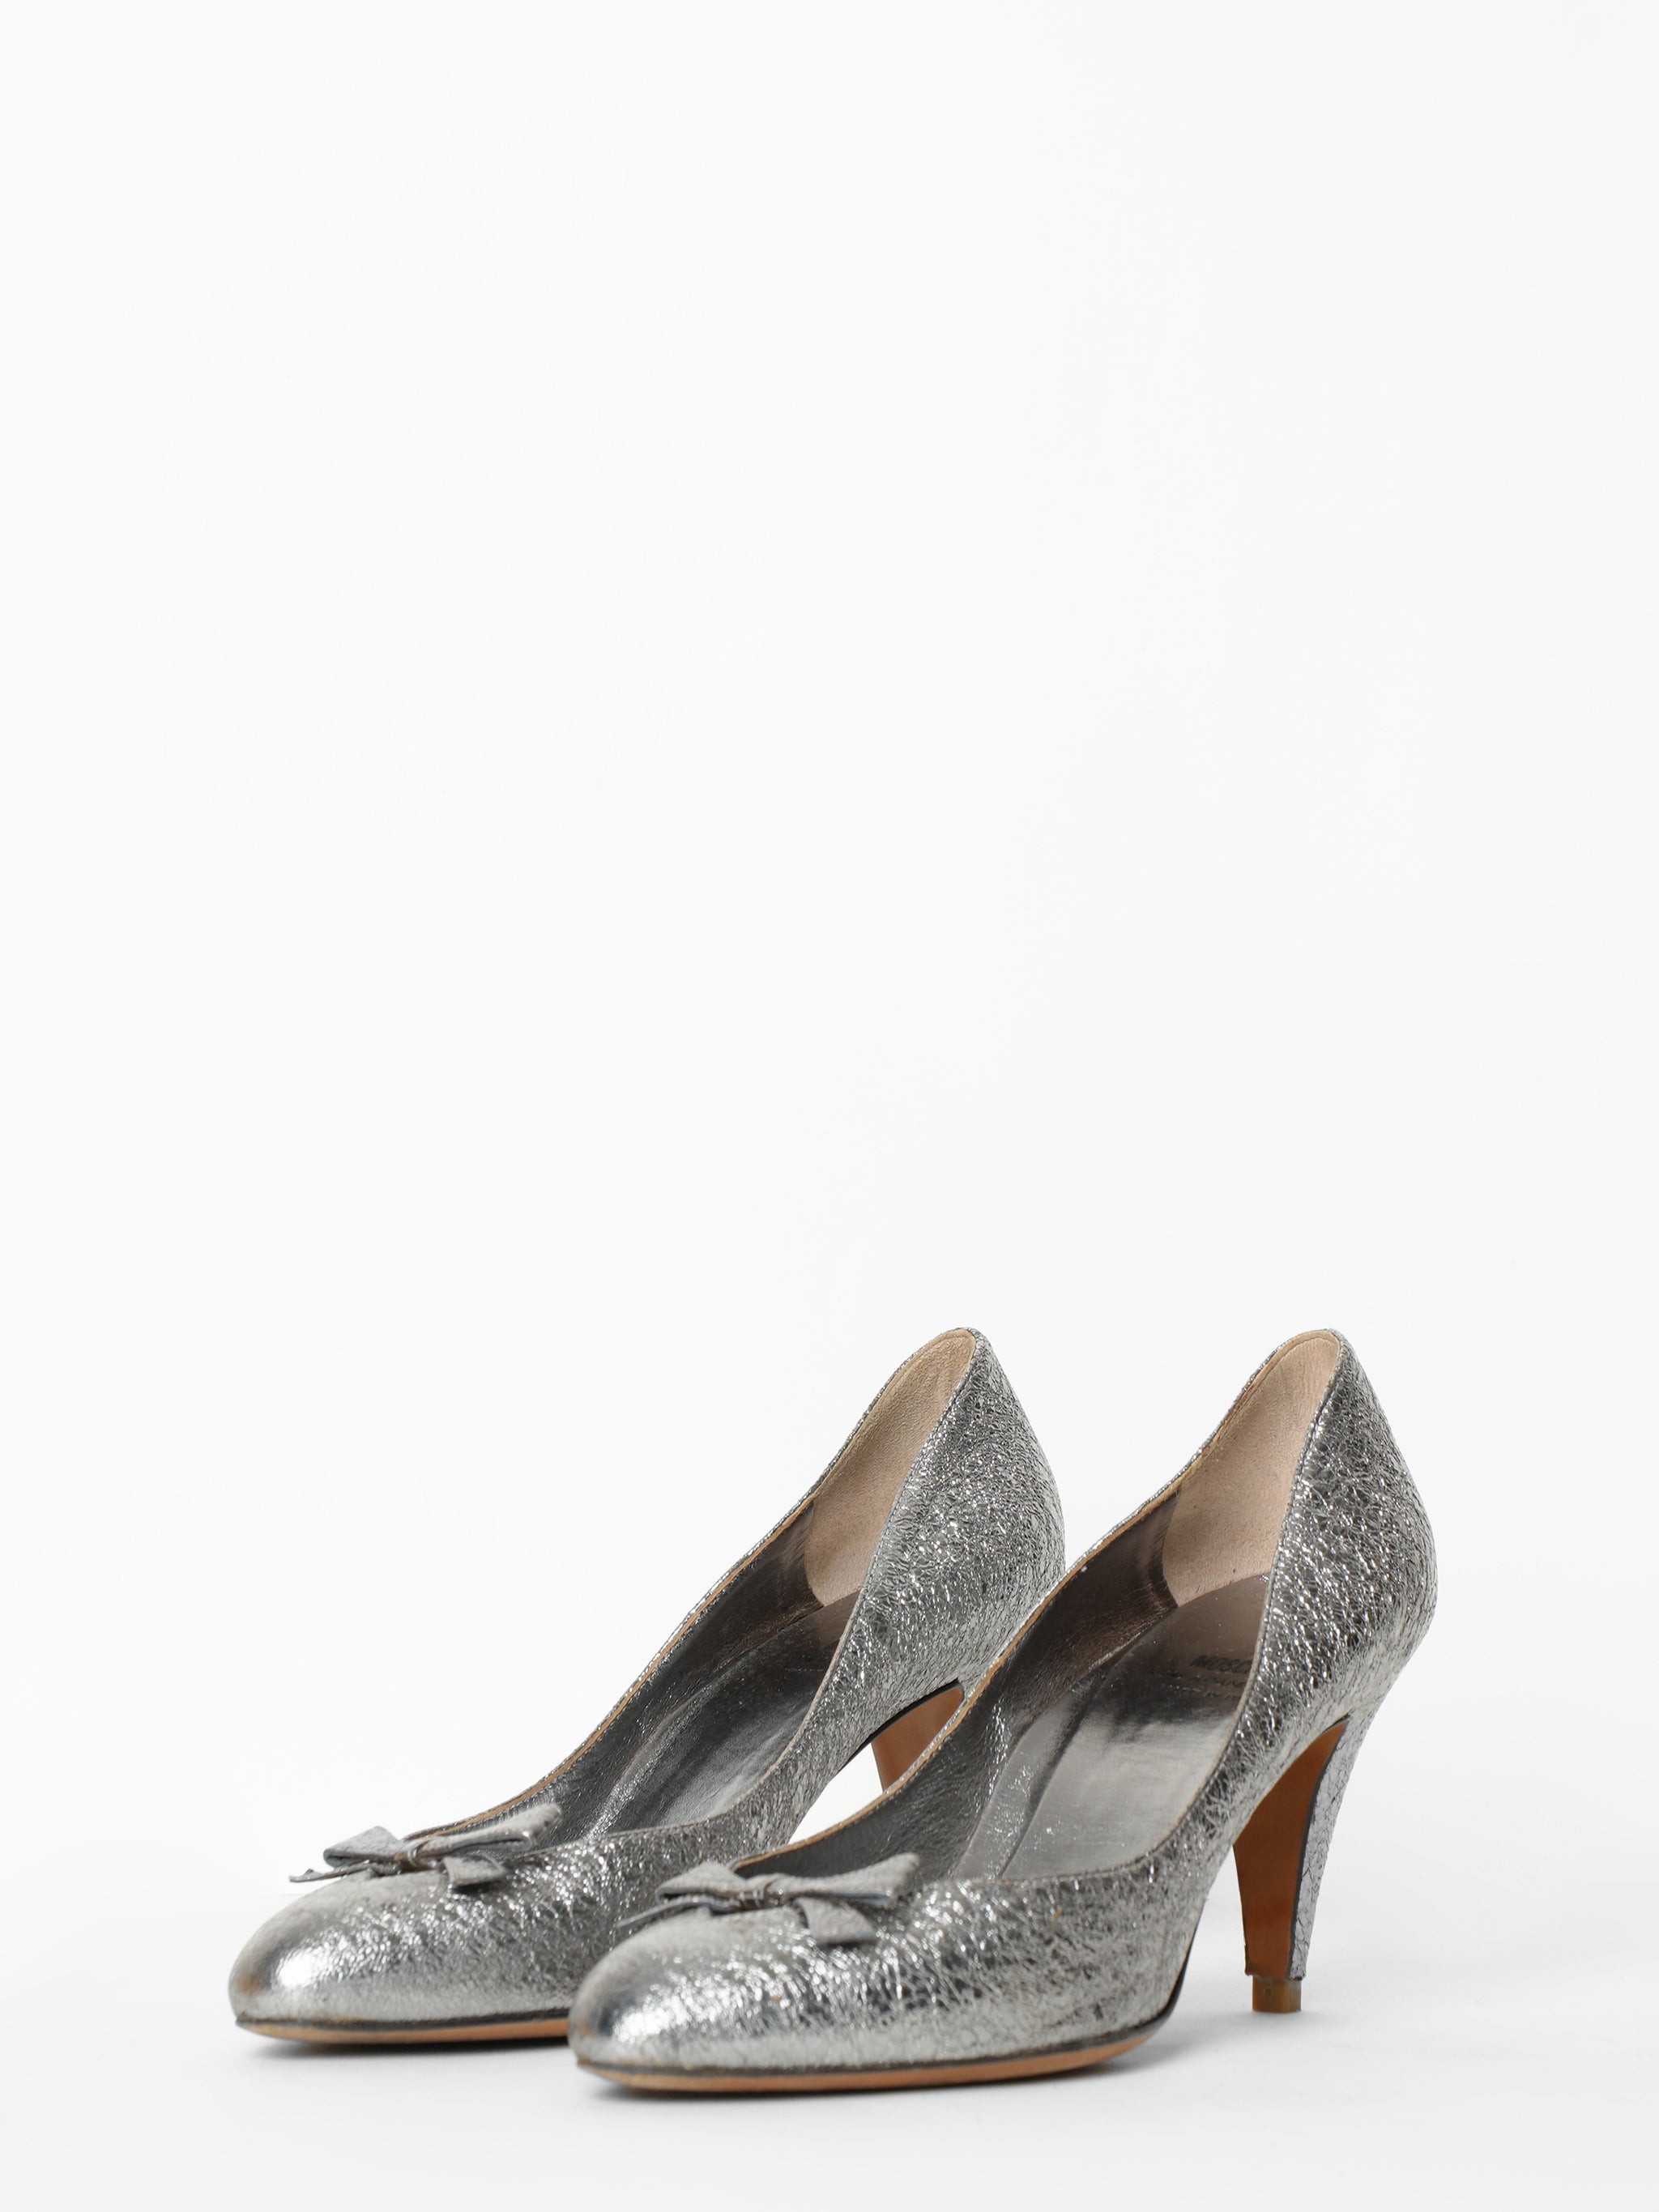 Moschino Silver Heels